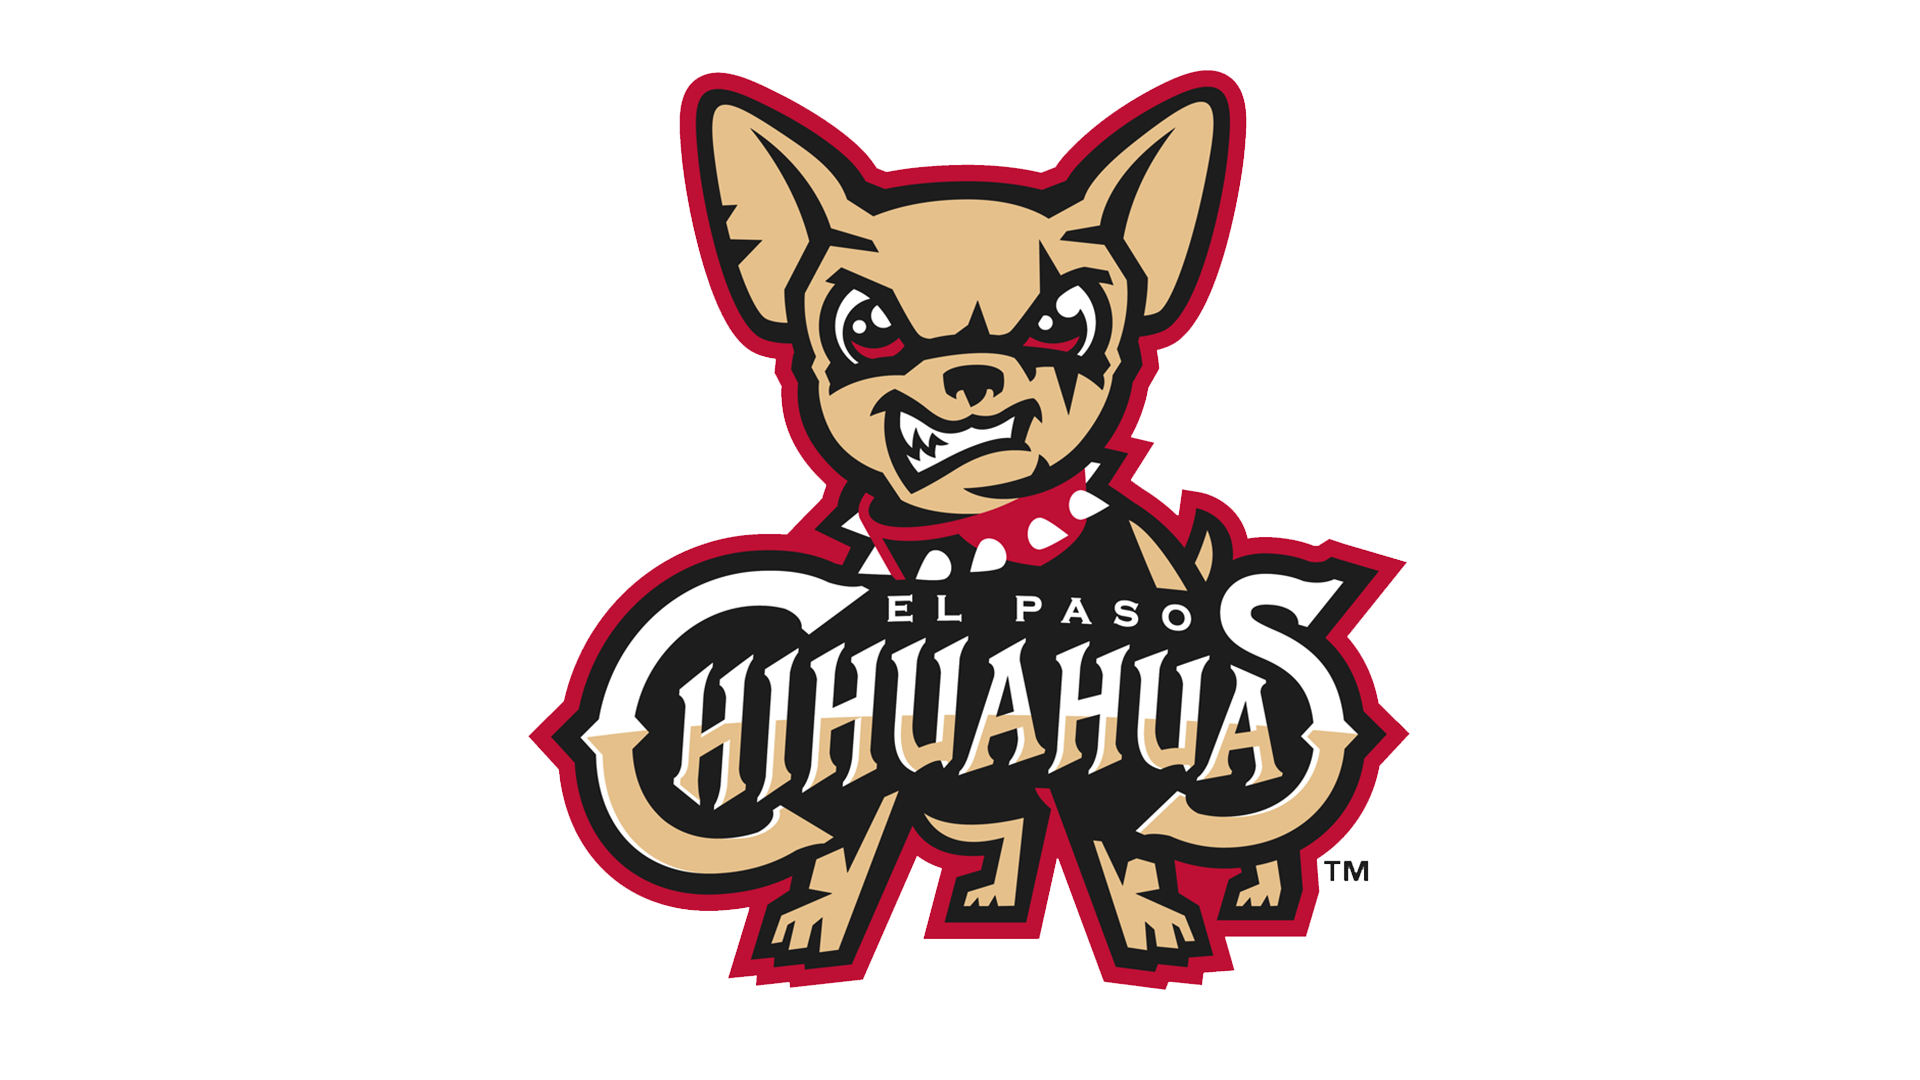 El Paso Chihuahuas logo and symbol, meaning, history, PNG